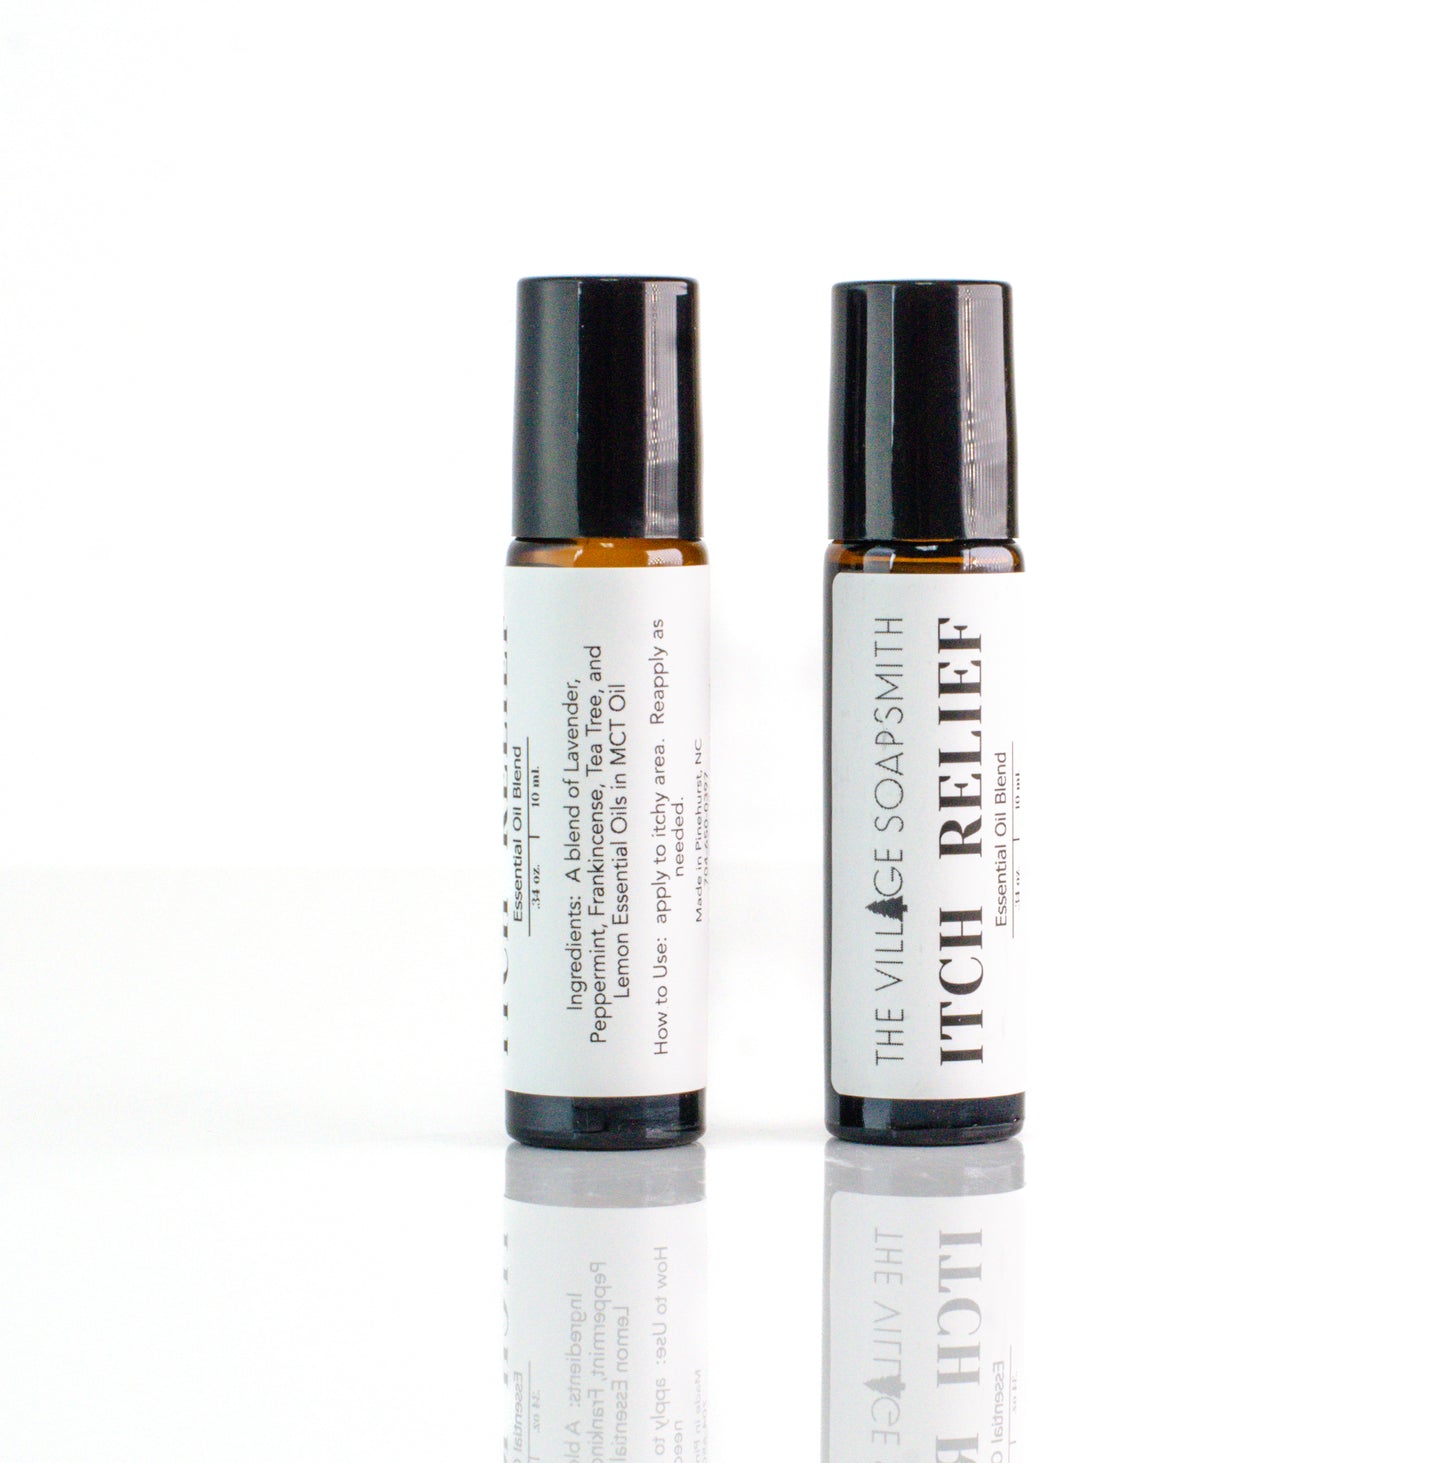 Aromatheraphy essential oil blend roller bottles